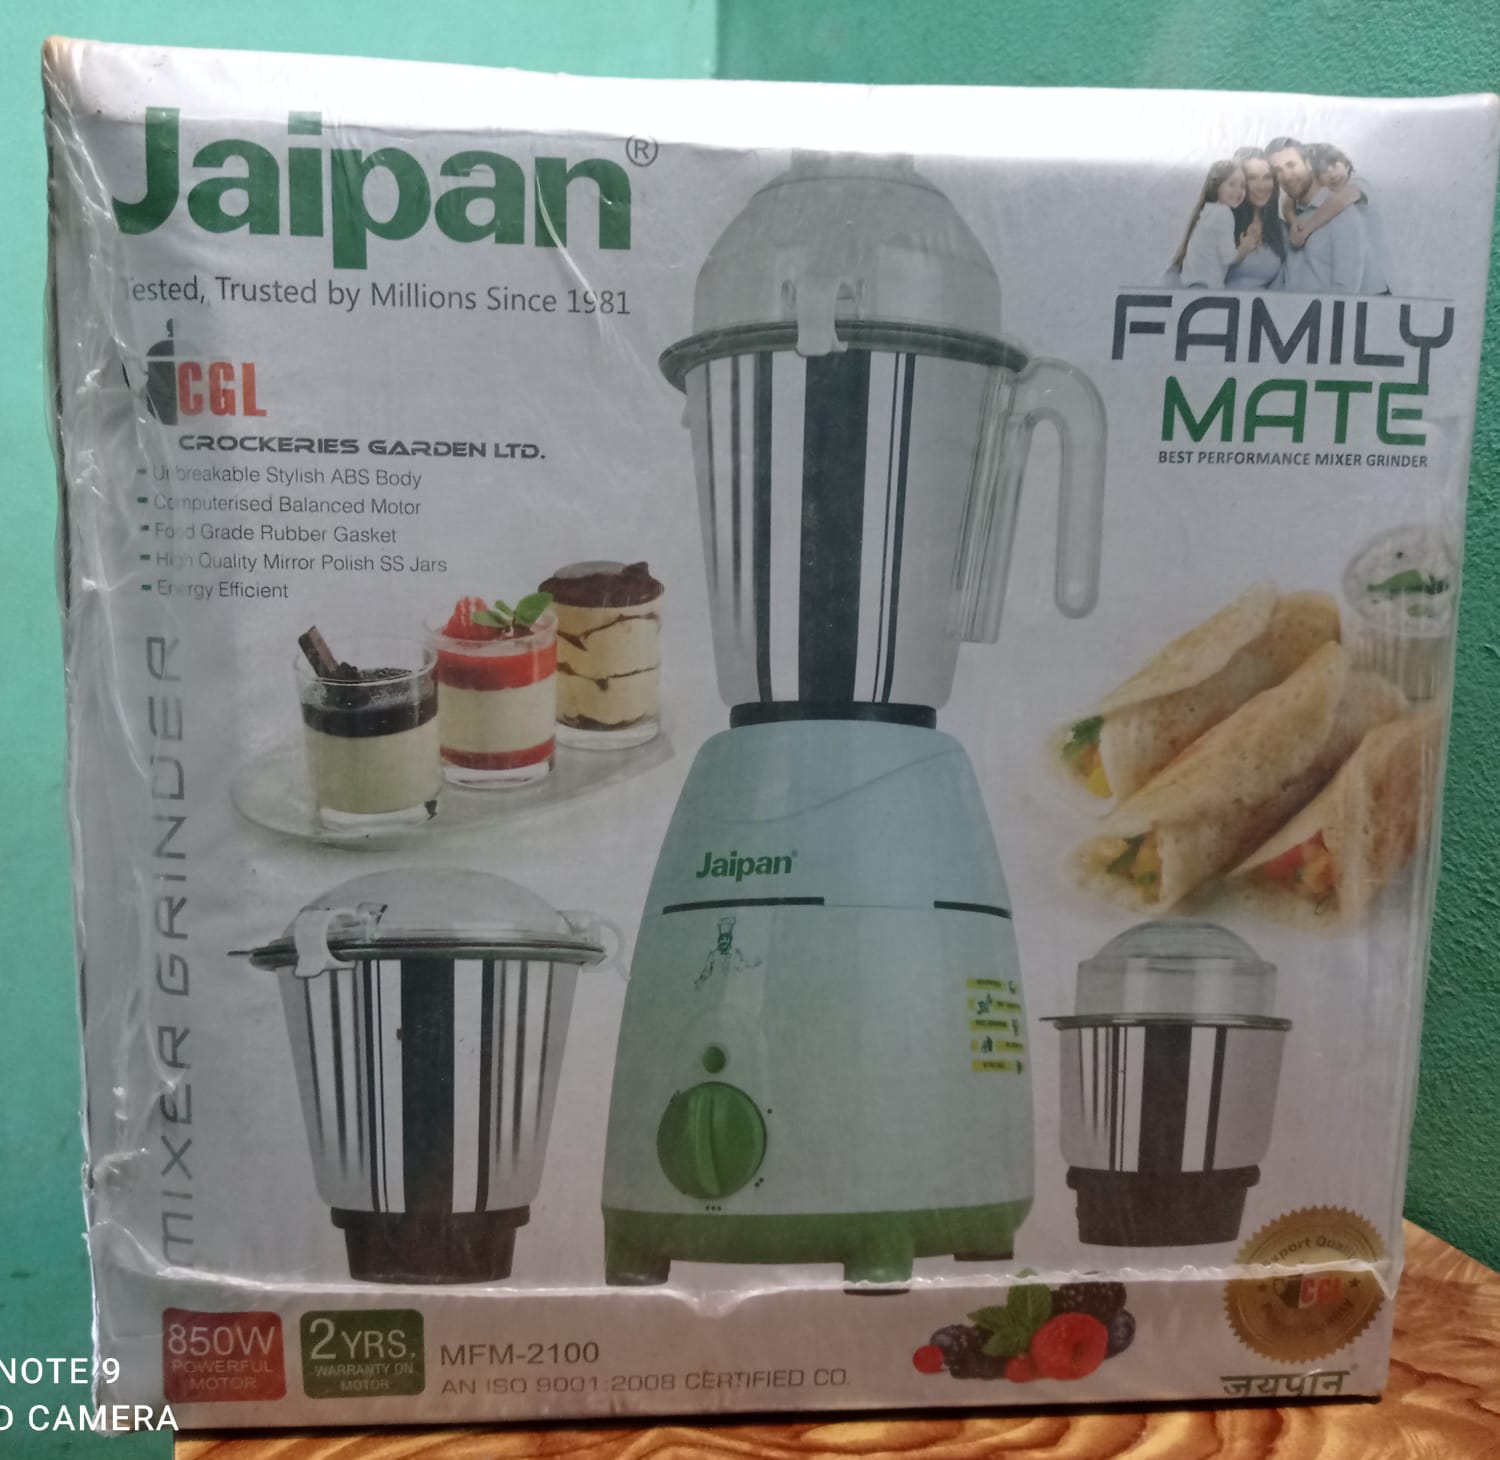 Jaipan MFM-2100 Blender Mixer Grinder Family Mate - 1000 Watt : Jaipan